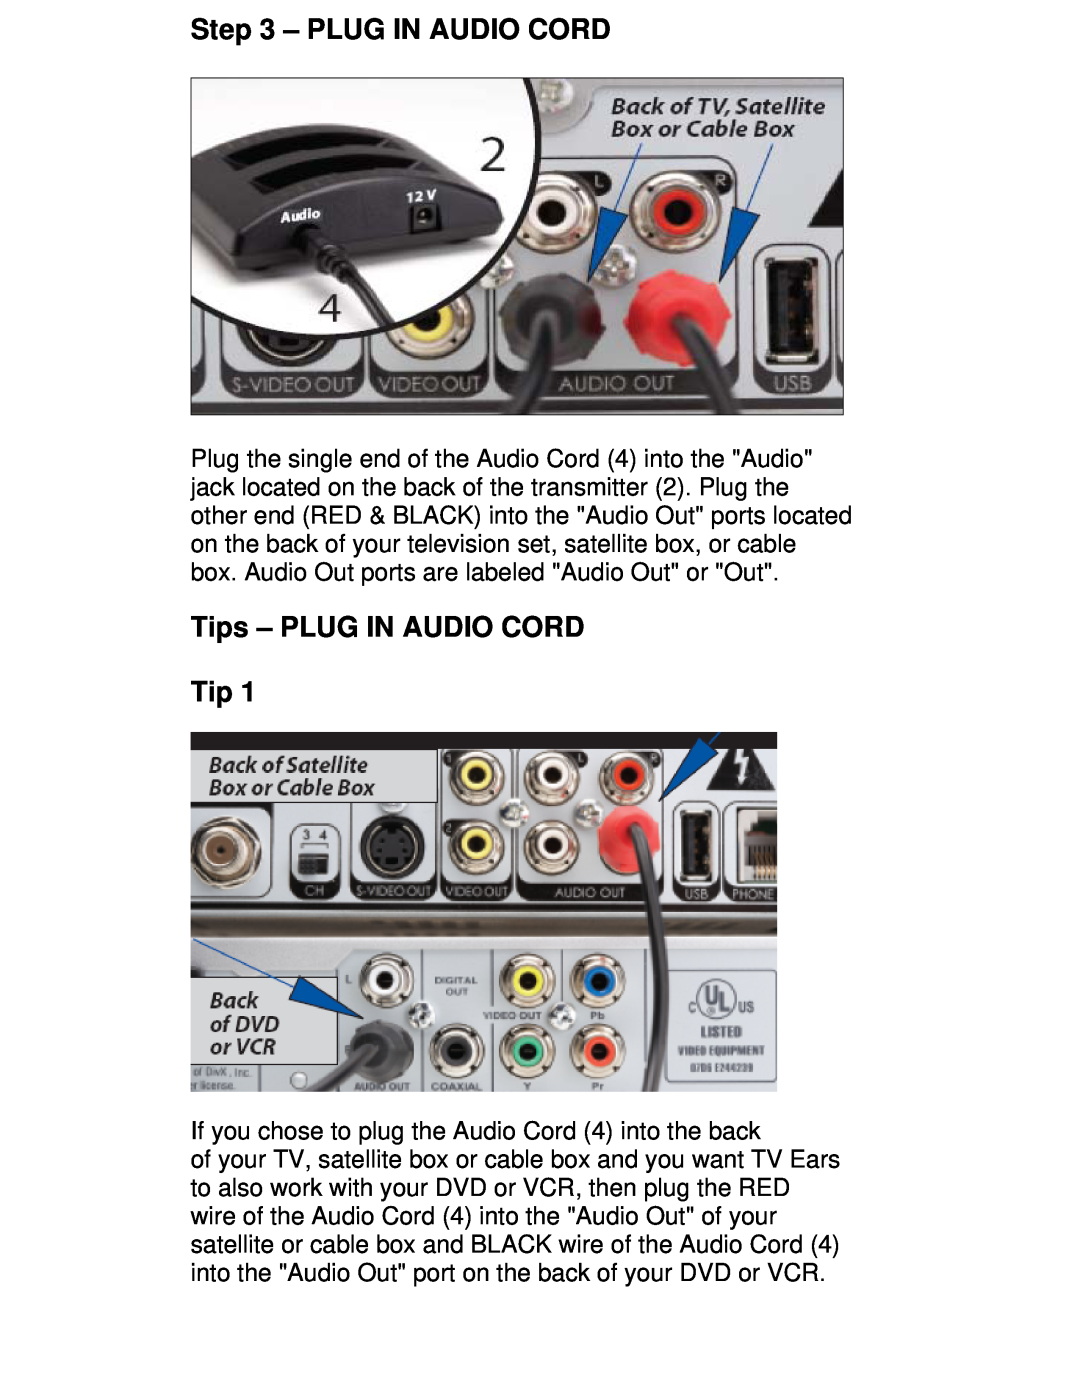 TV Ears Headset System installation instructions Plug In Audio Cord, Tips - PLUG IN AUDIO CORD Tip 